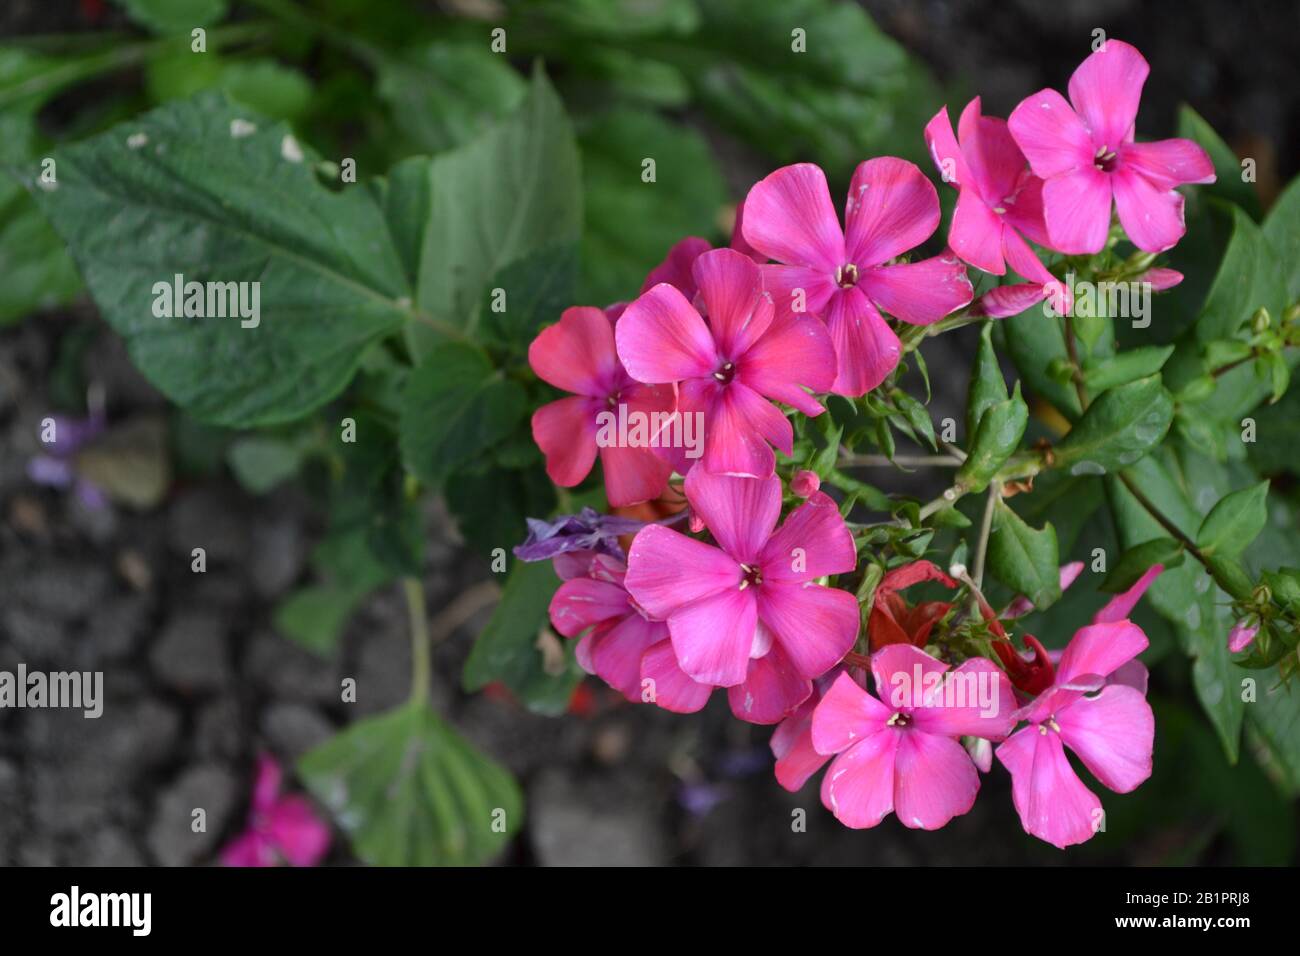 Phlox. Polemoniaceae. Growing flowers. Flowerbed. Garden. Floriculture. Pink inflorescence. Beautiful flowers. Green leaves. High bushes. Horizontal p Stock Photo